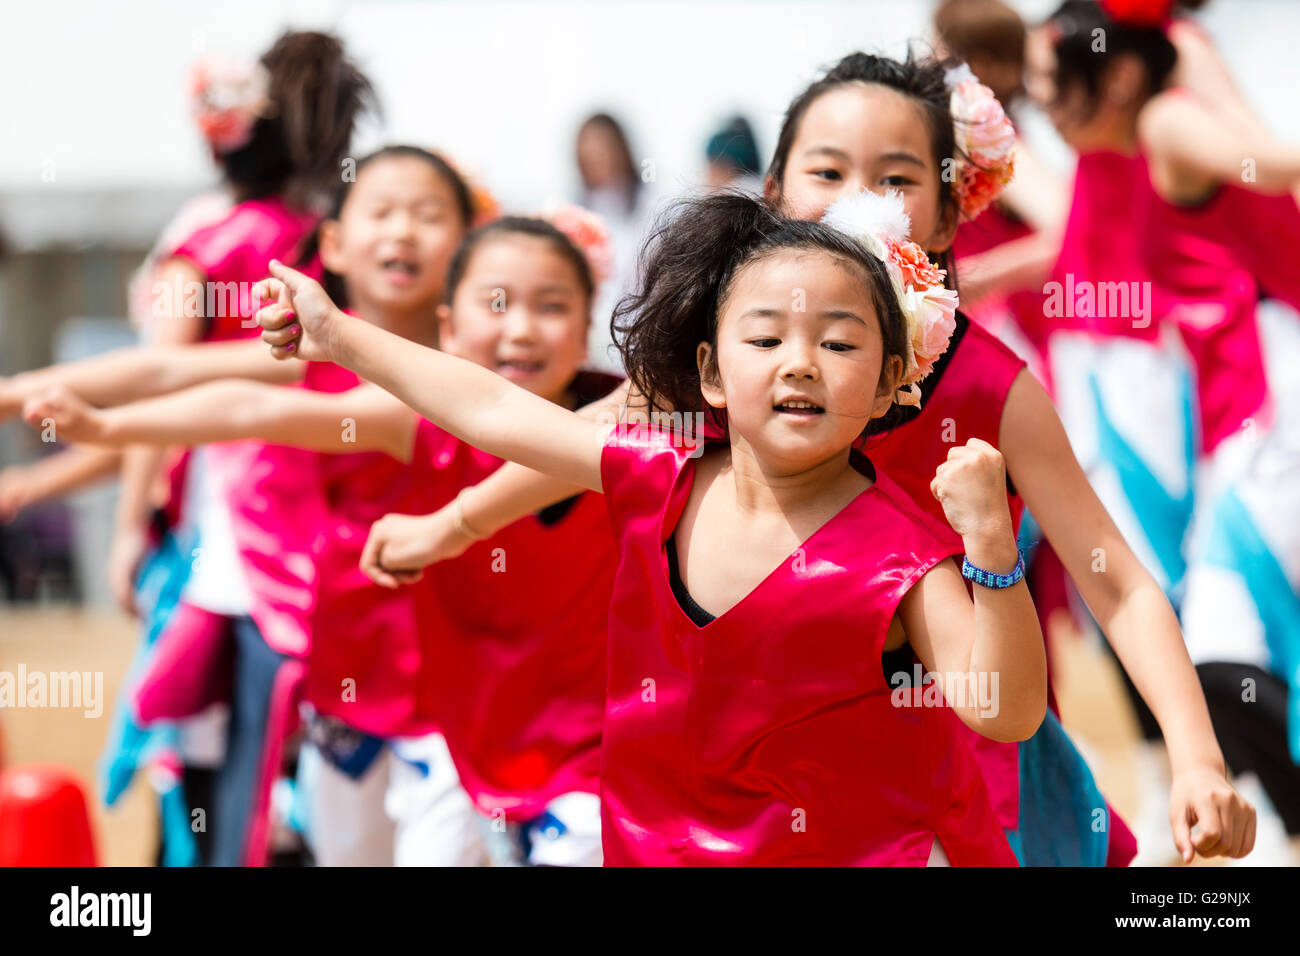 Japan, Kumamoto. Hinokuni Yosakoi dance festival. Children, with flowers in hair, running in a row, part of woman's team, wearing pink happi jackets. Stock Photo